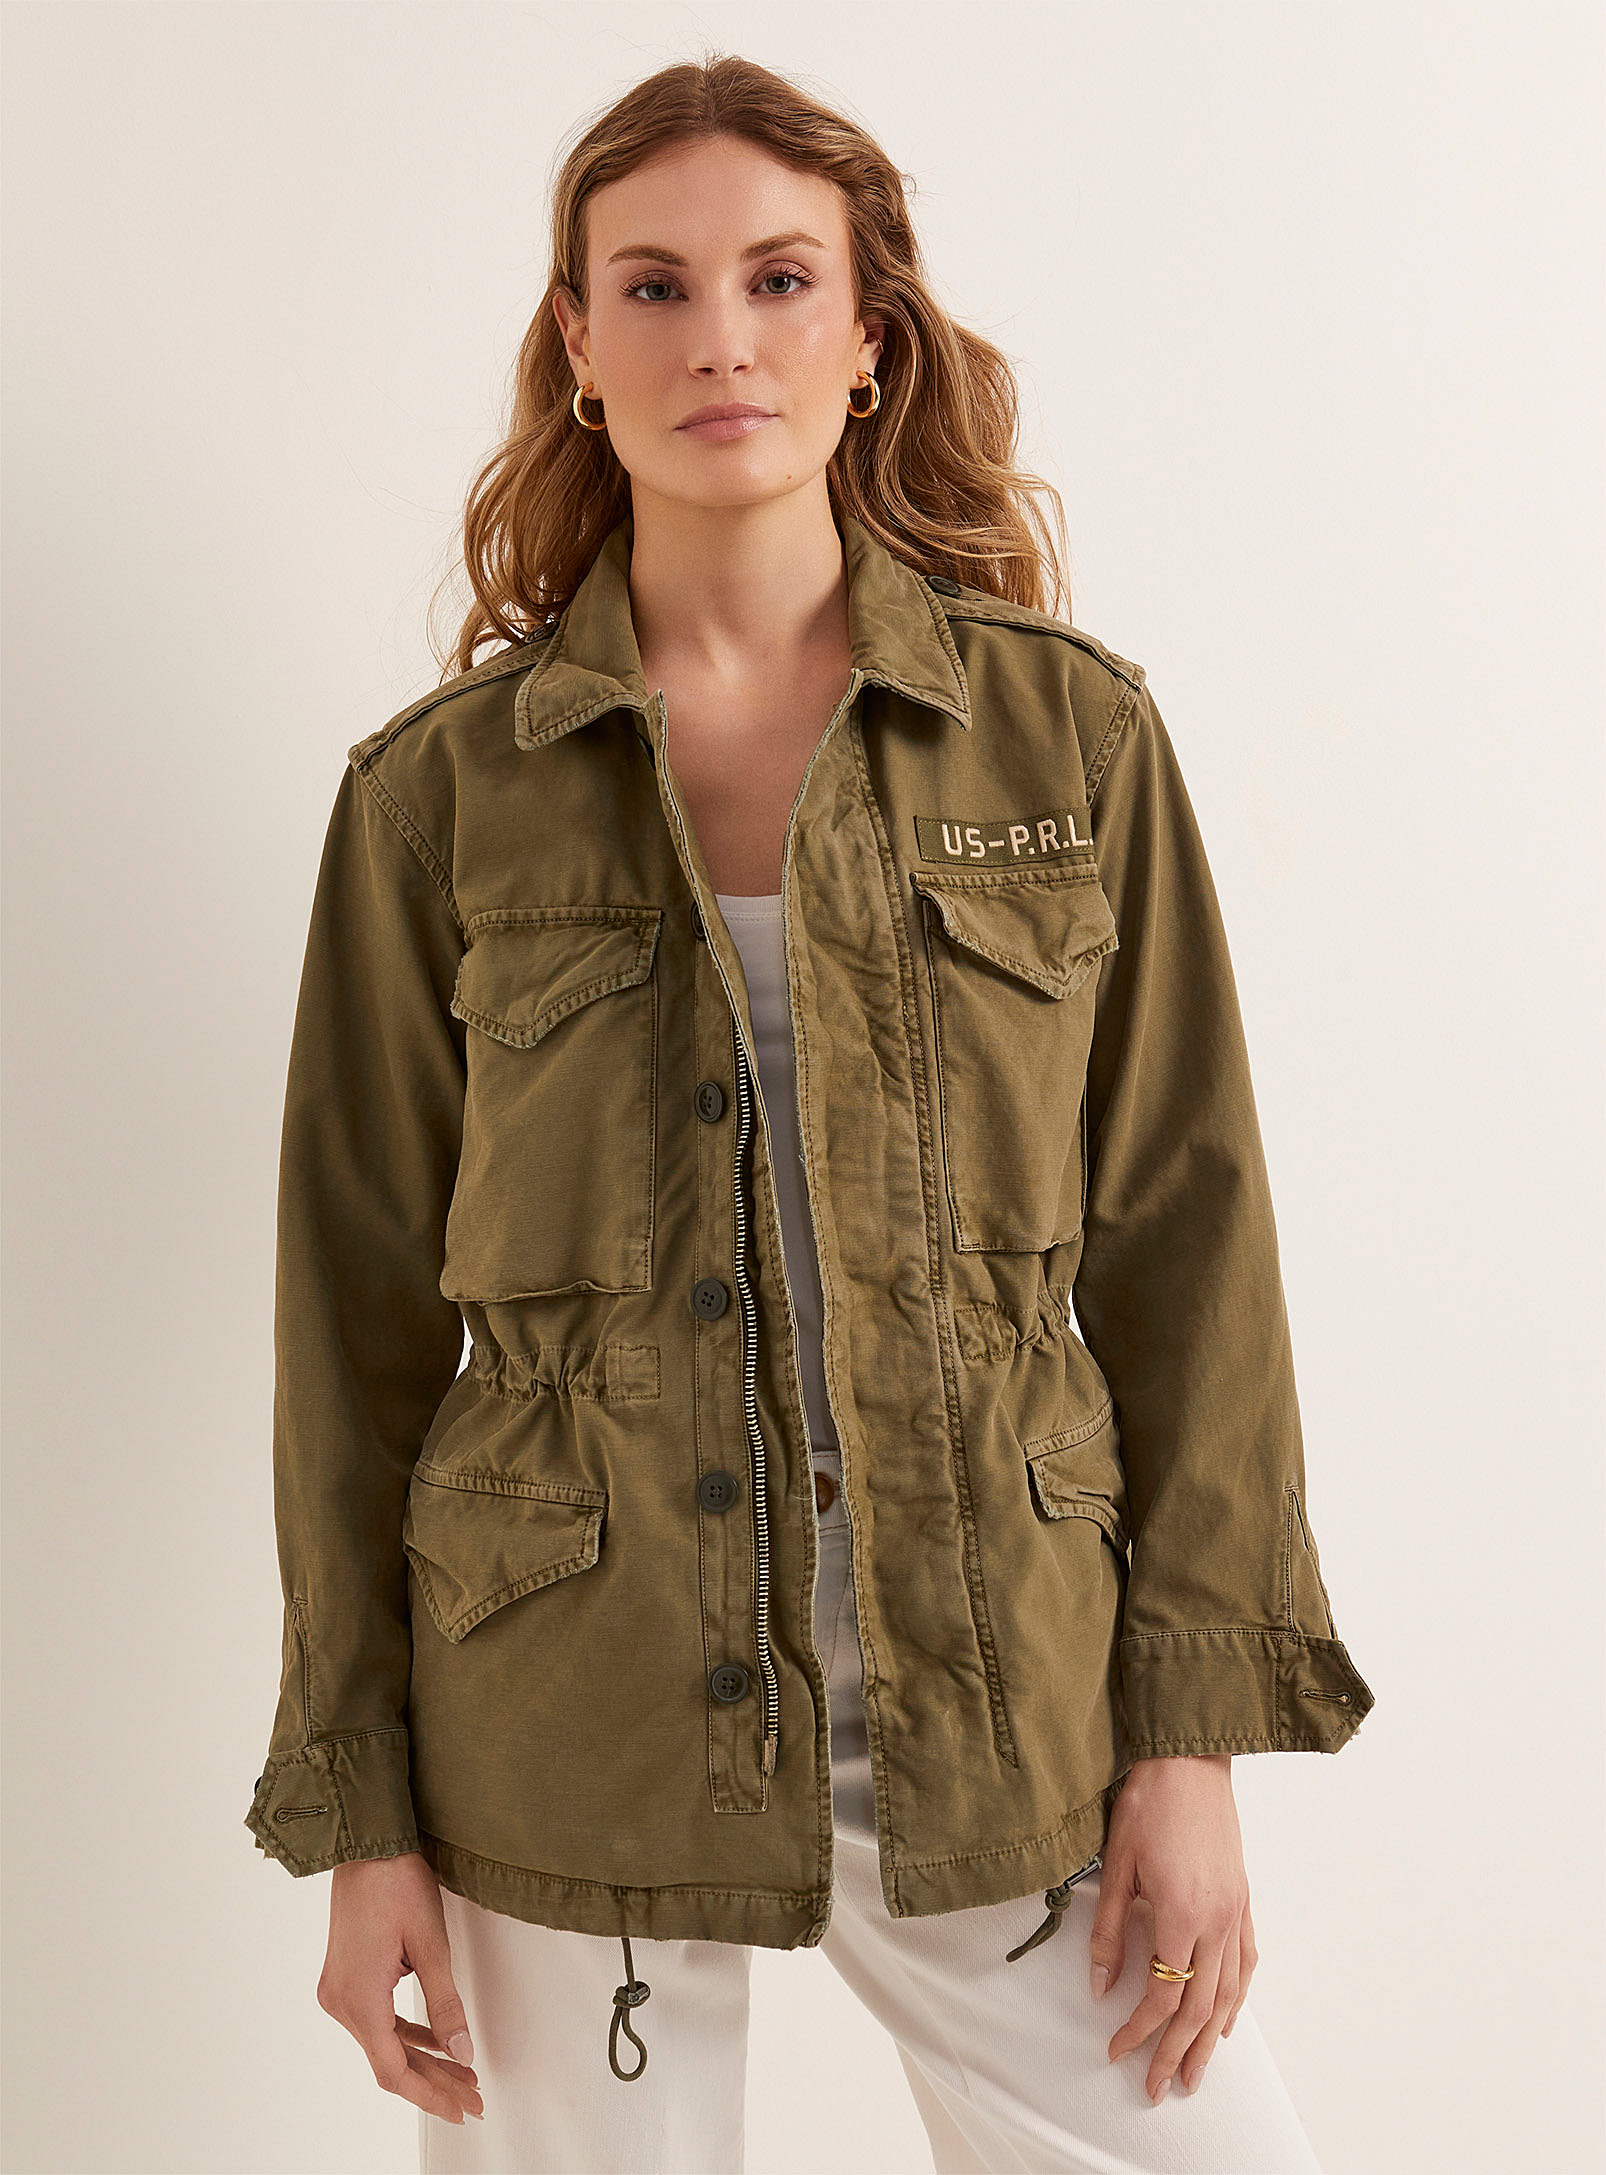 Polo Ralph Lauren - Women's Military-style jacket